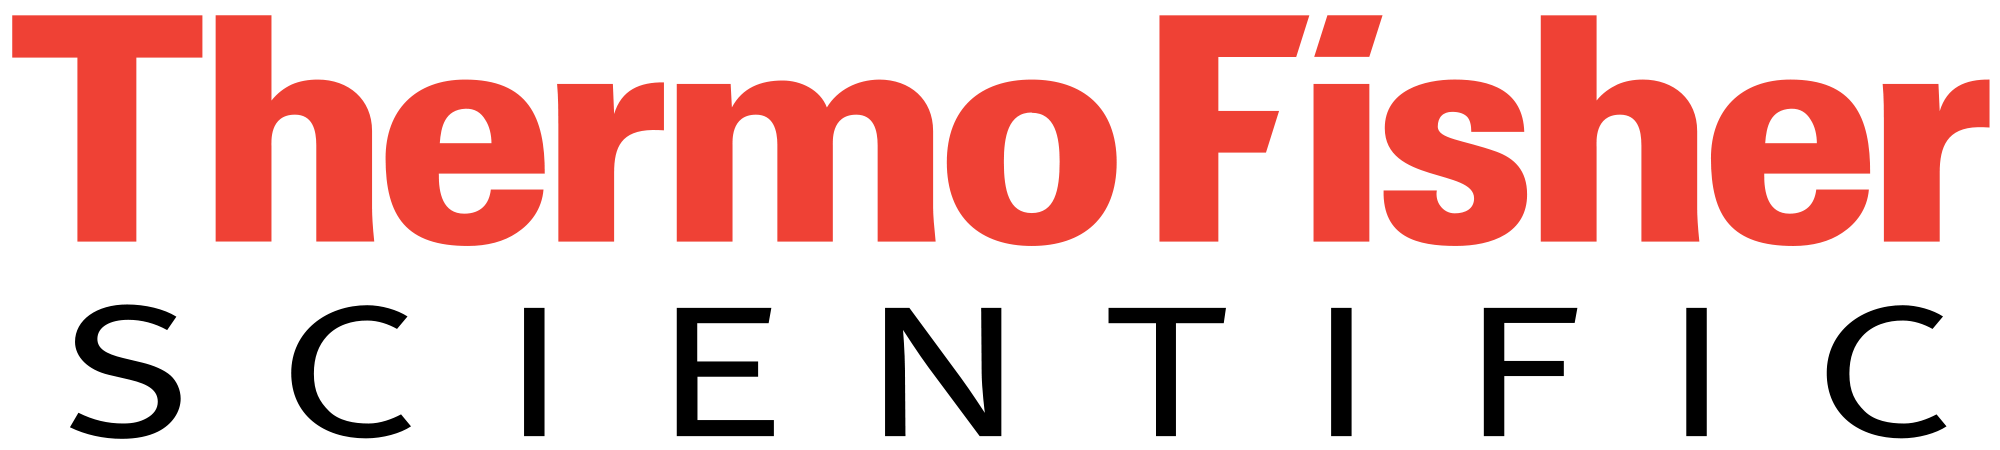 Logo Thermofisher scientific